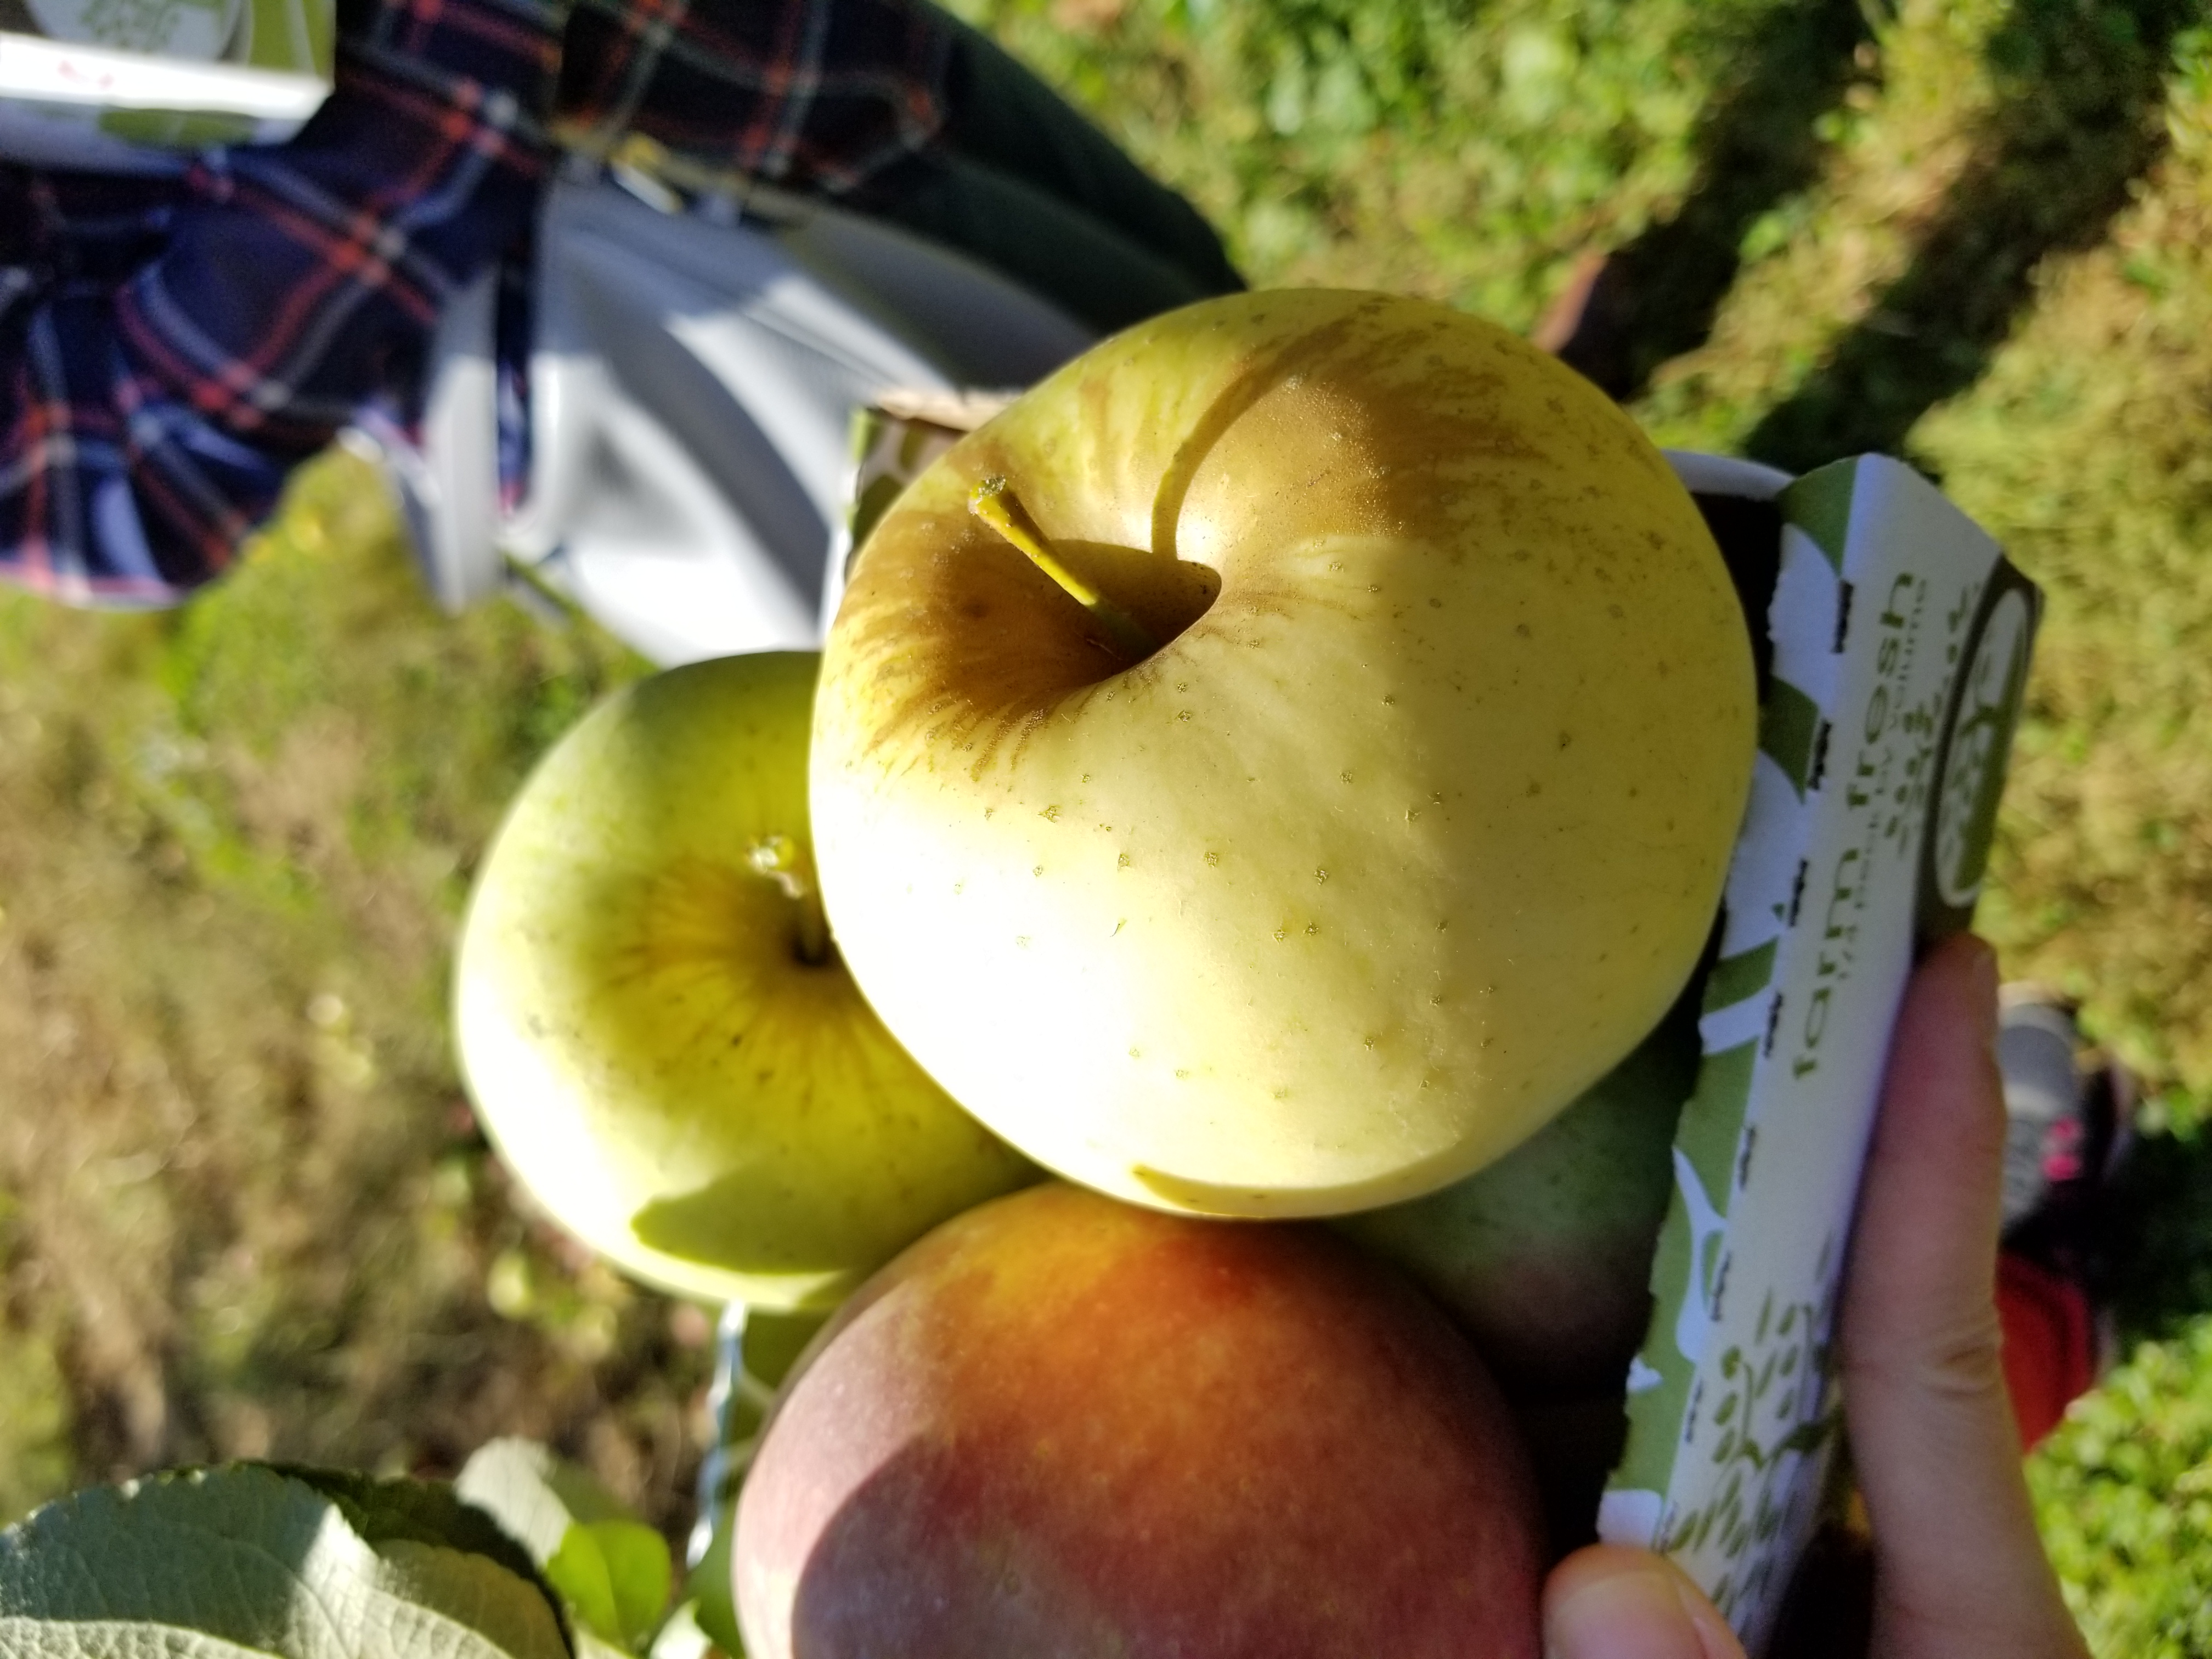 Linvilla Orchard - Apples